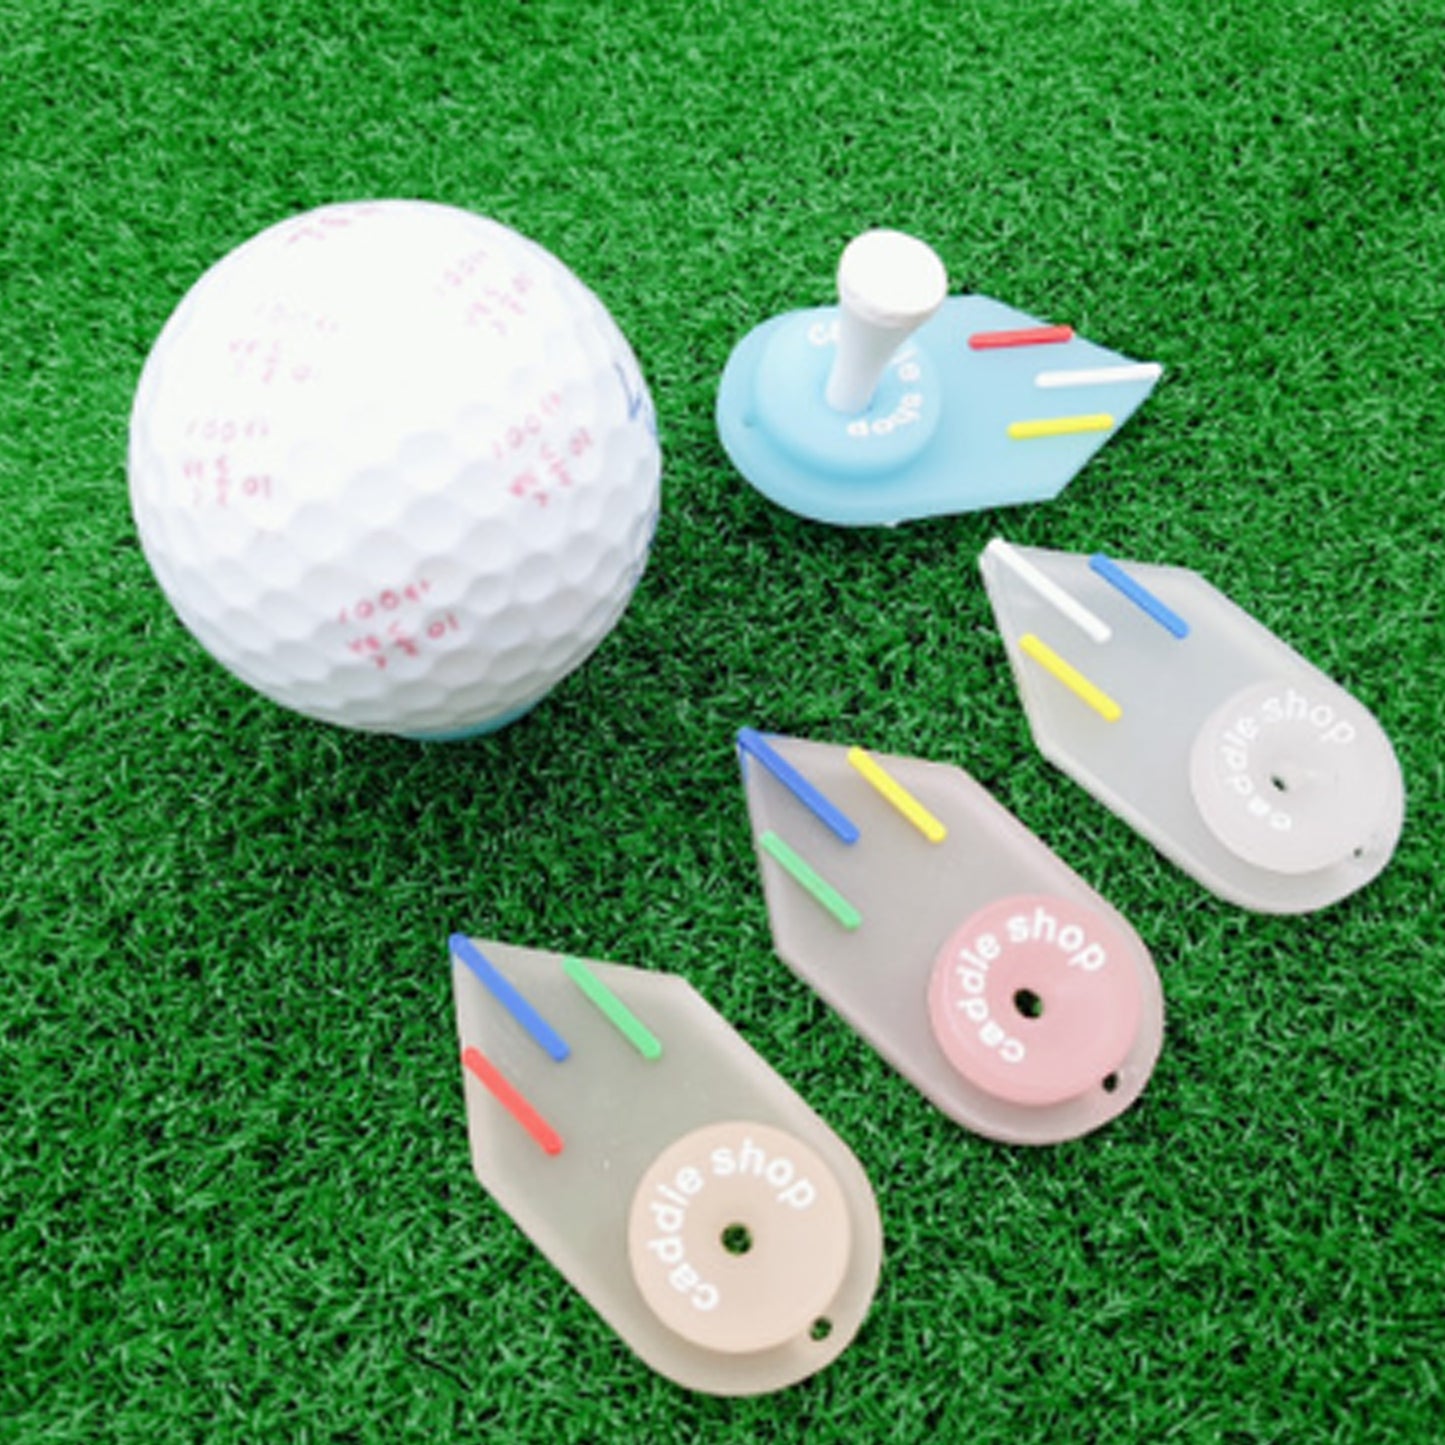 4 Types of Luminous Multi-Ring Golf Tee Holders Golf Accessories Set